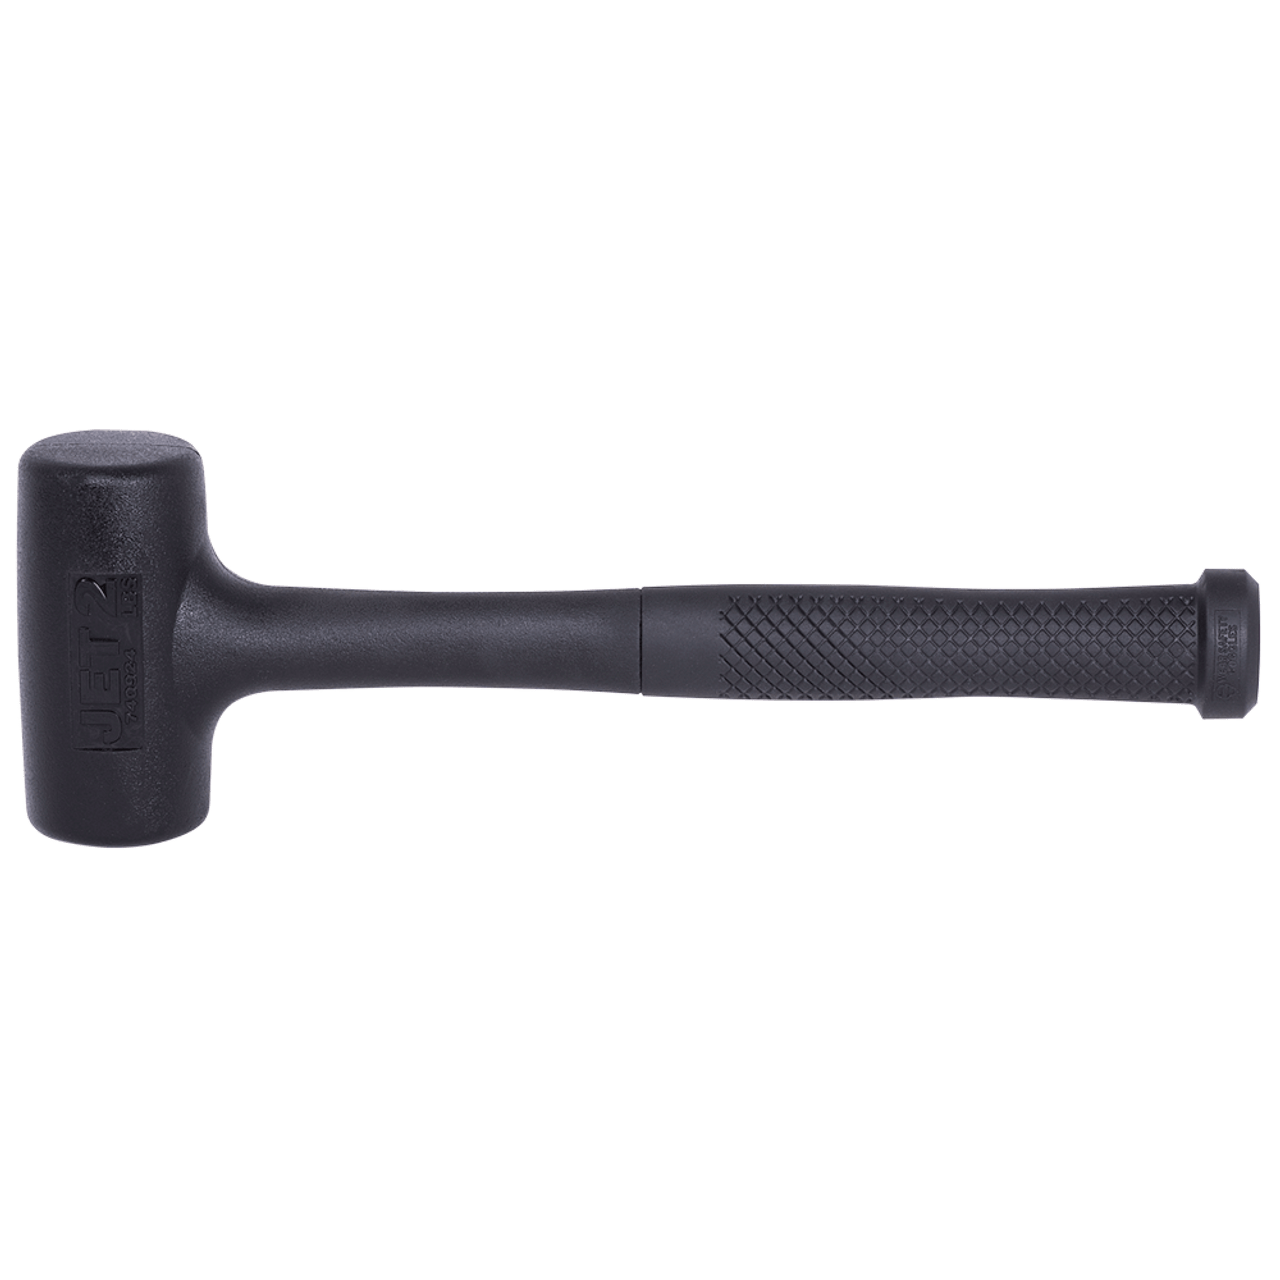 1-1/2 lb. Dead Blow Sledge Hammer 740922